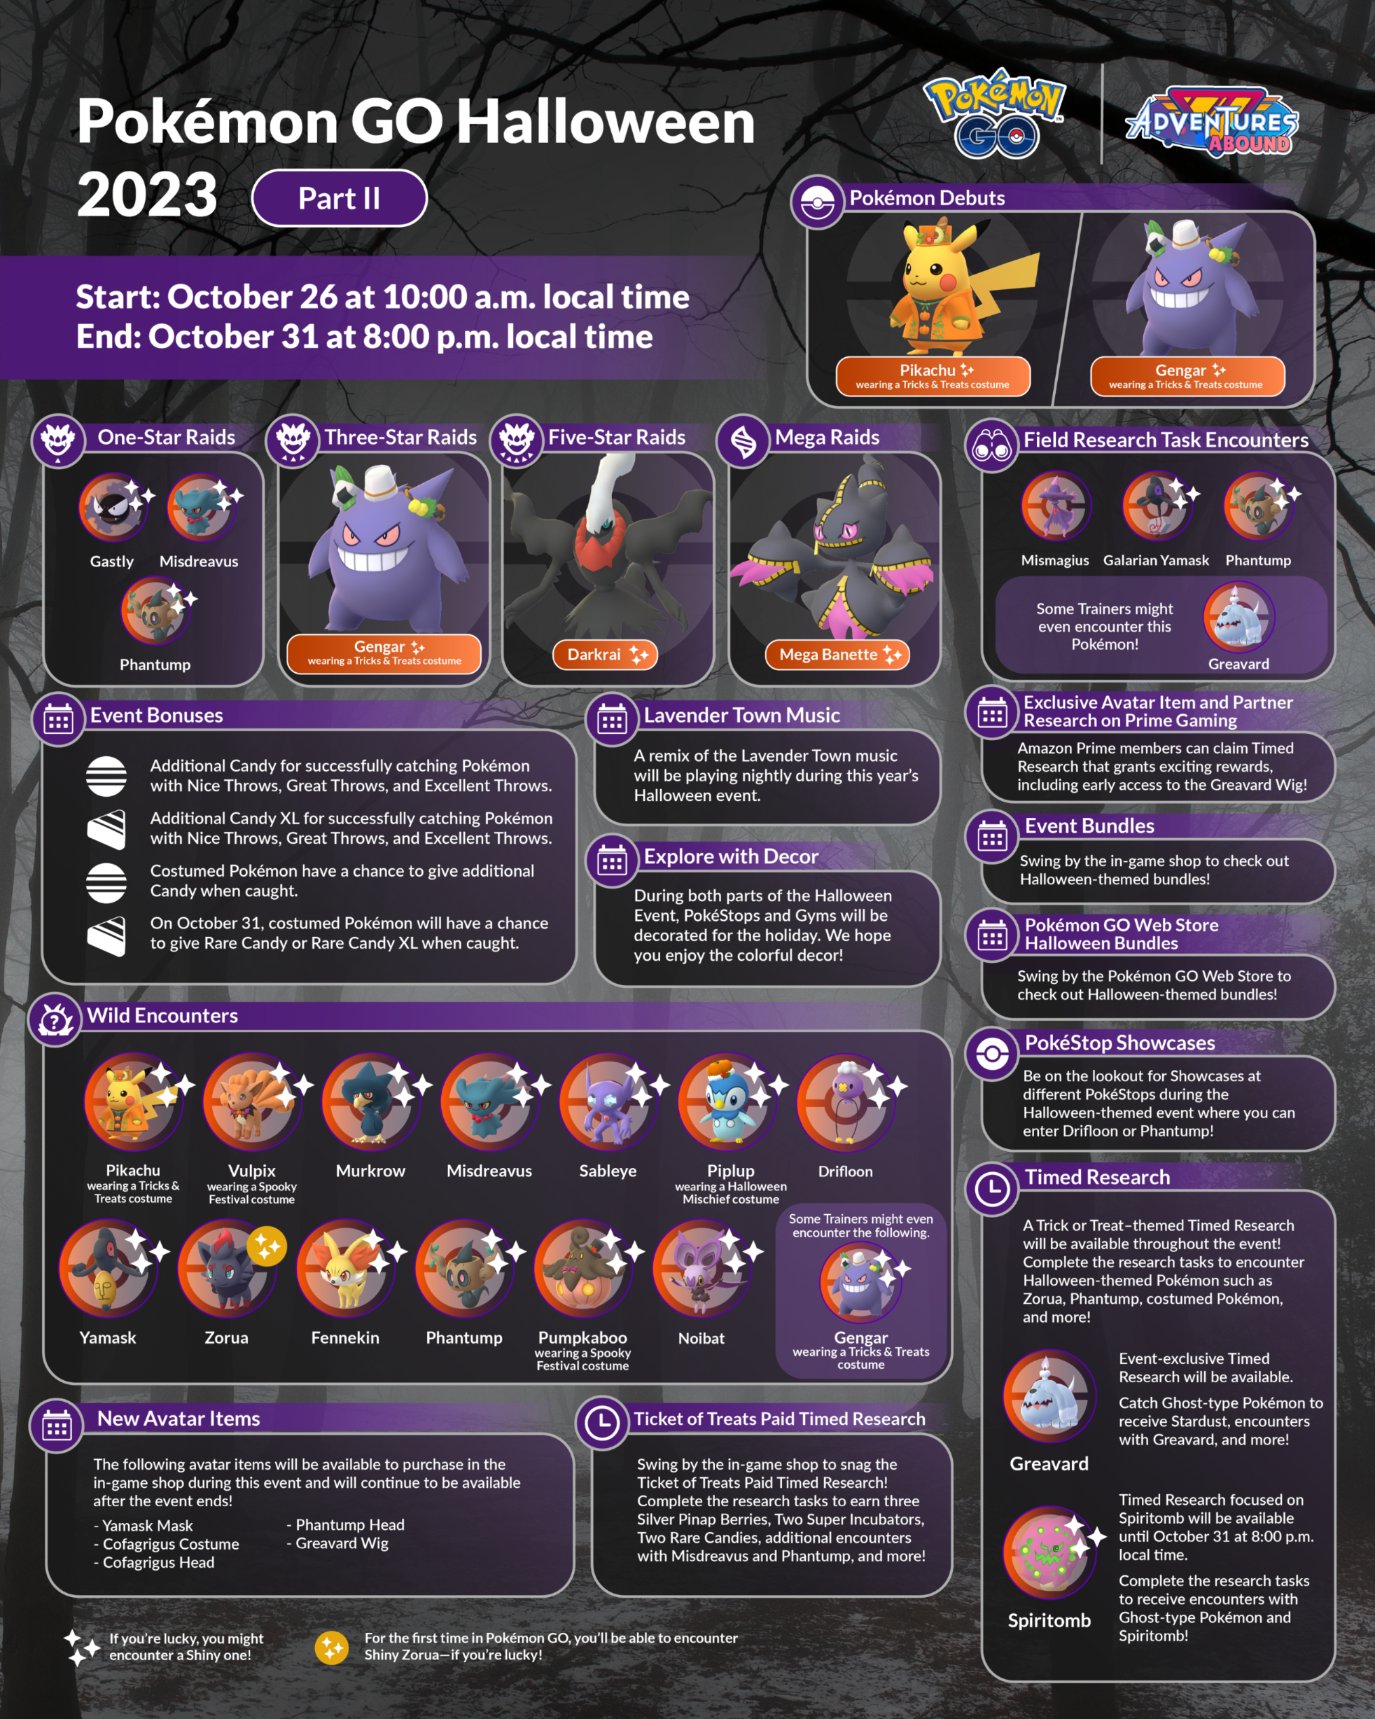 HOW TO CATCH GREAVARD & SPIRITOMB IN THE 2023 HALLOWEEN EVENT! *Super* Rare  Shiny Pokemon 